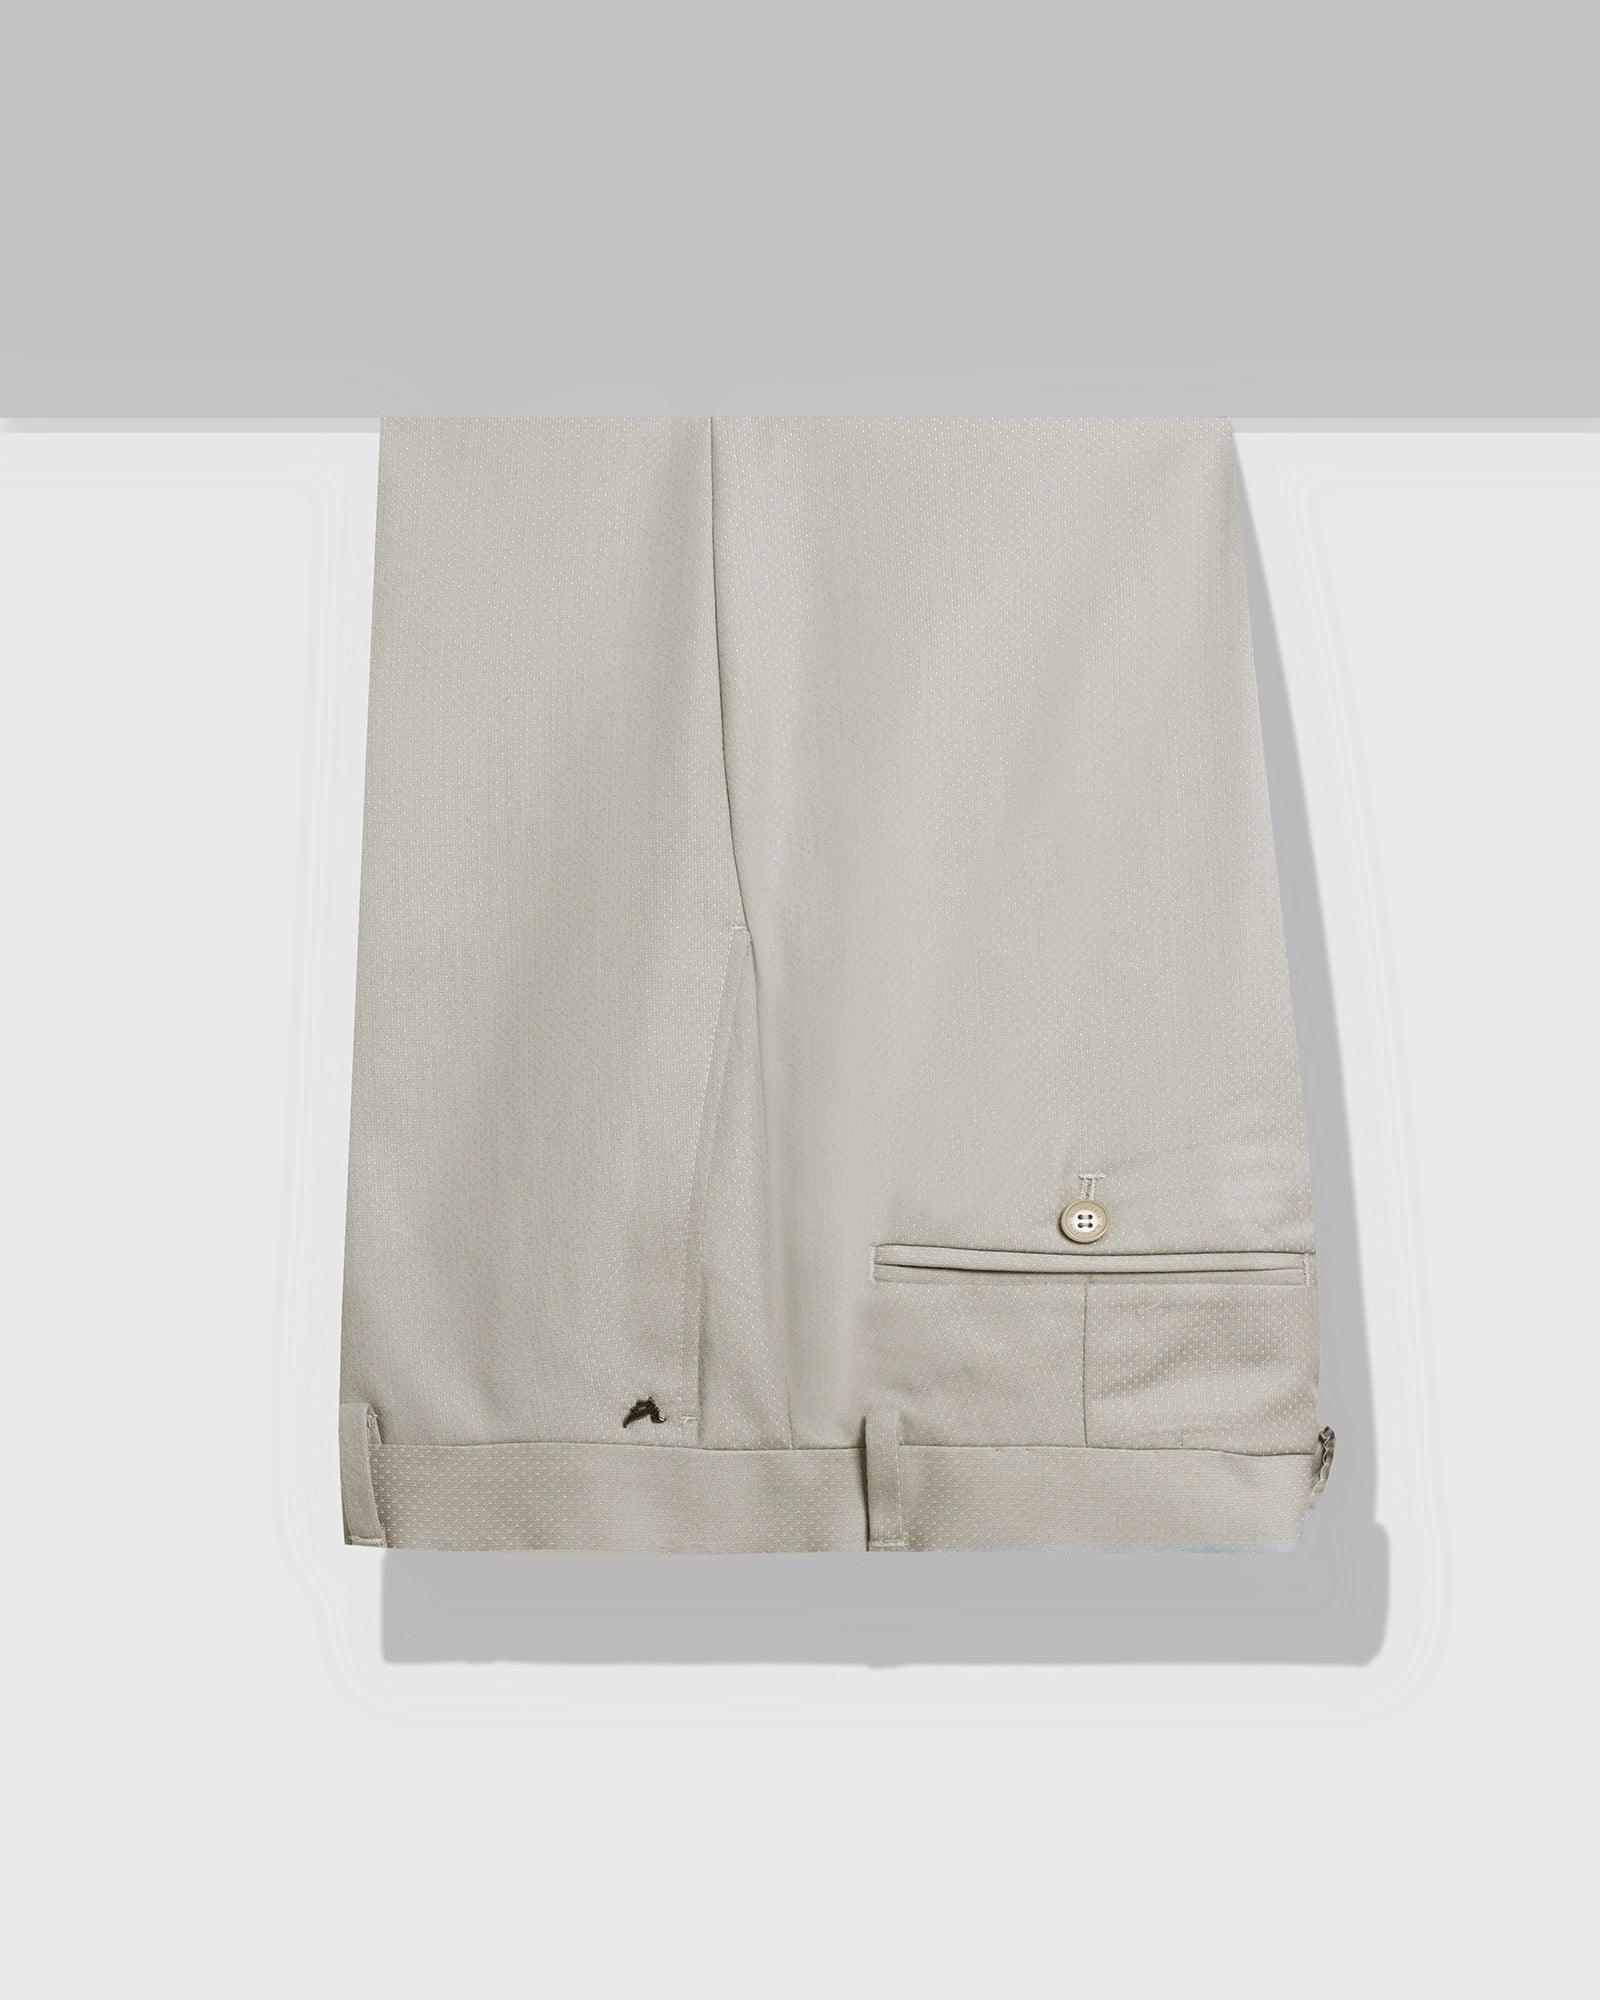 Slim Comfort B-95 Formal Mint Textured Trouser - Cane